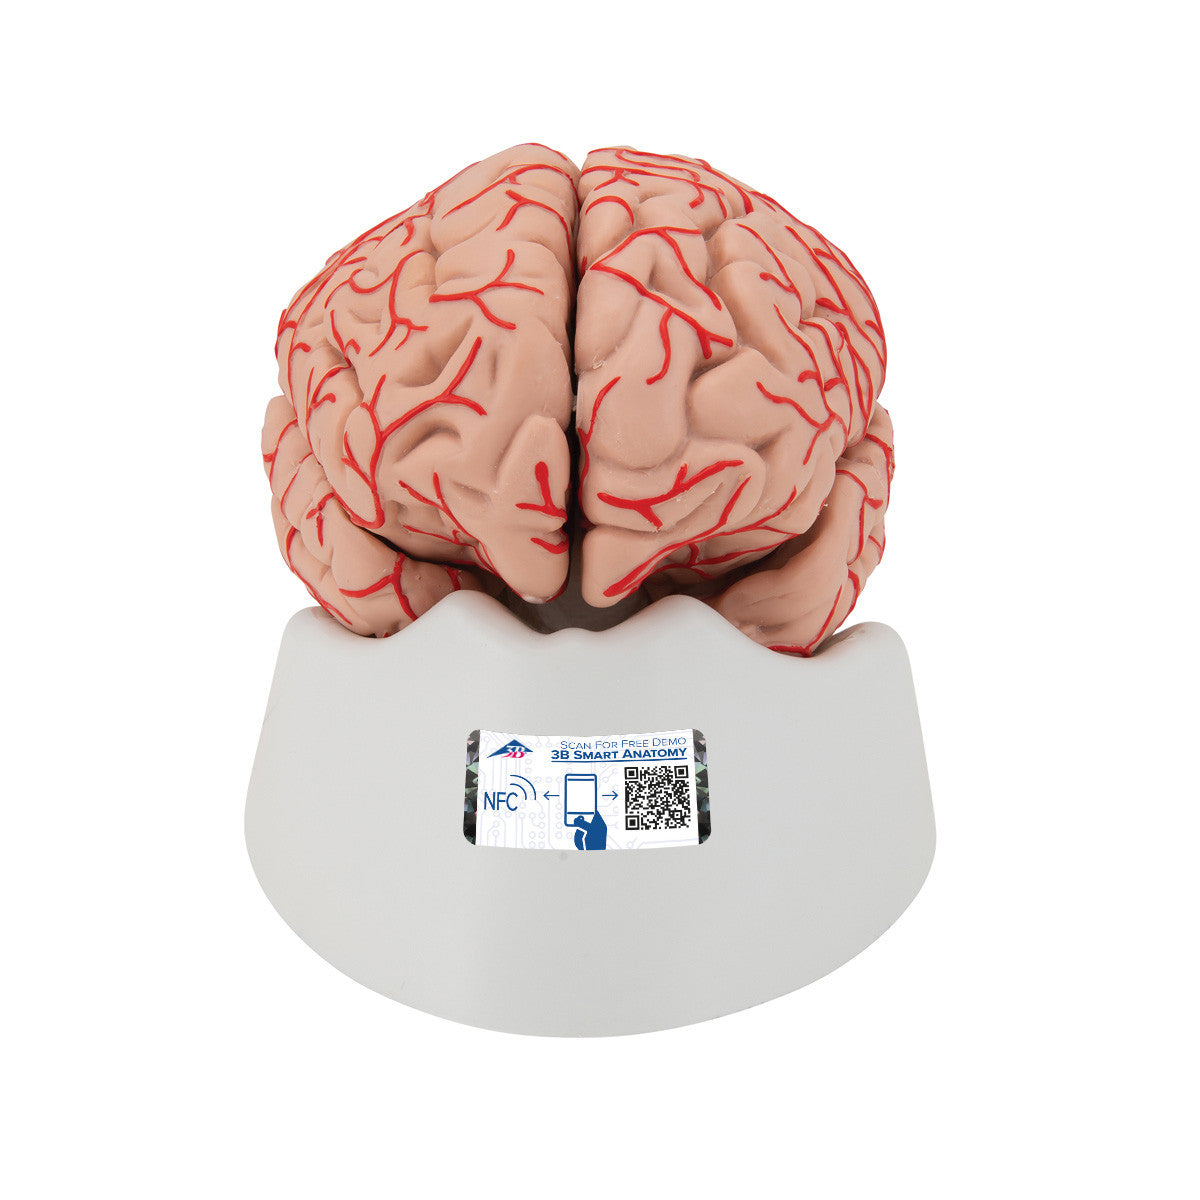 c20_01_1200_1200_human-brain-model-with-arteries-9-part-3b-smart-anatomy__71921.1589753160.1280.1280.jpg